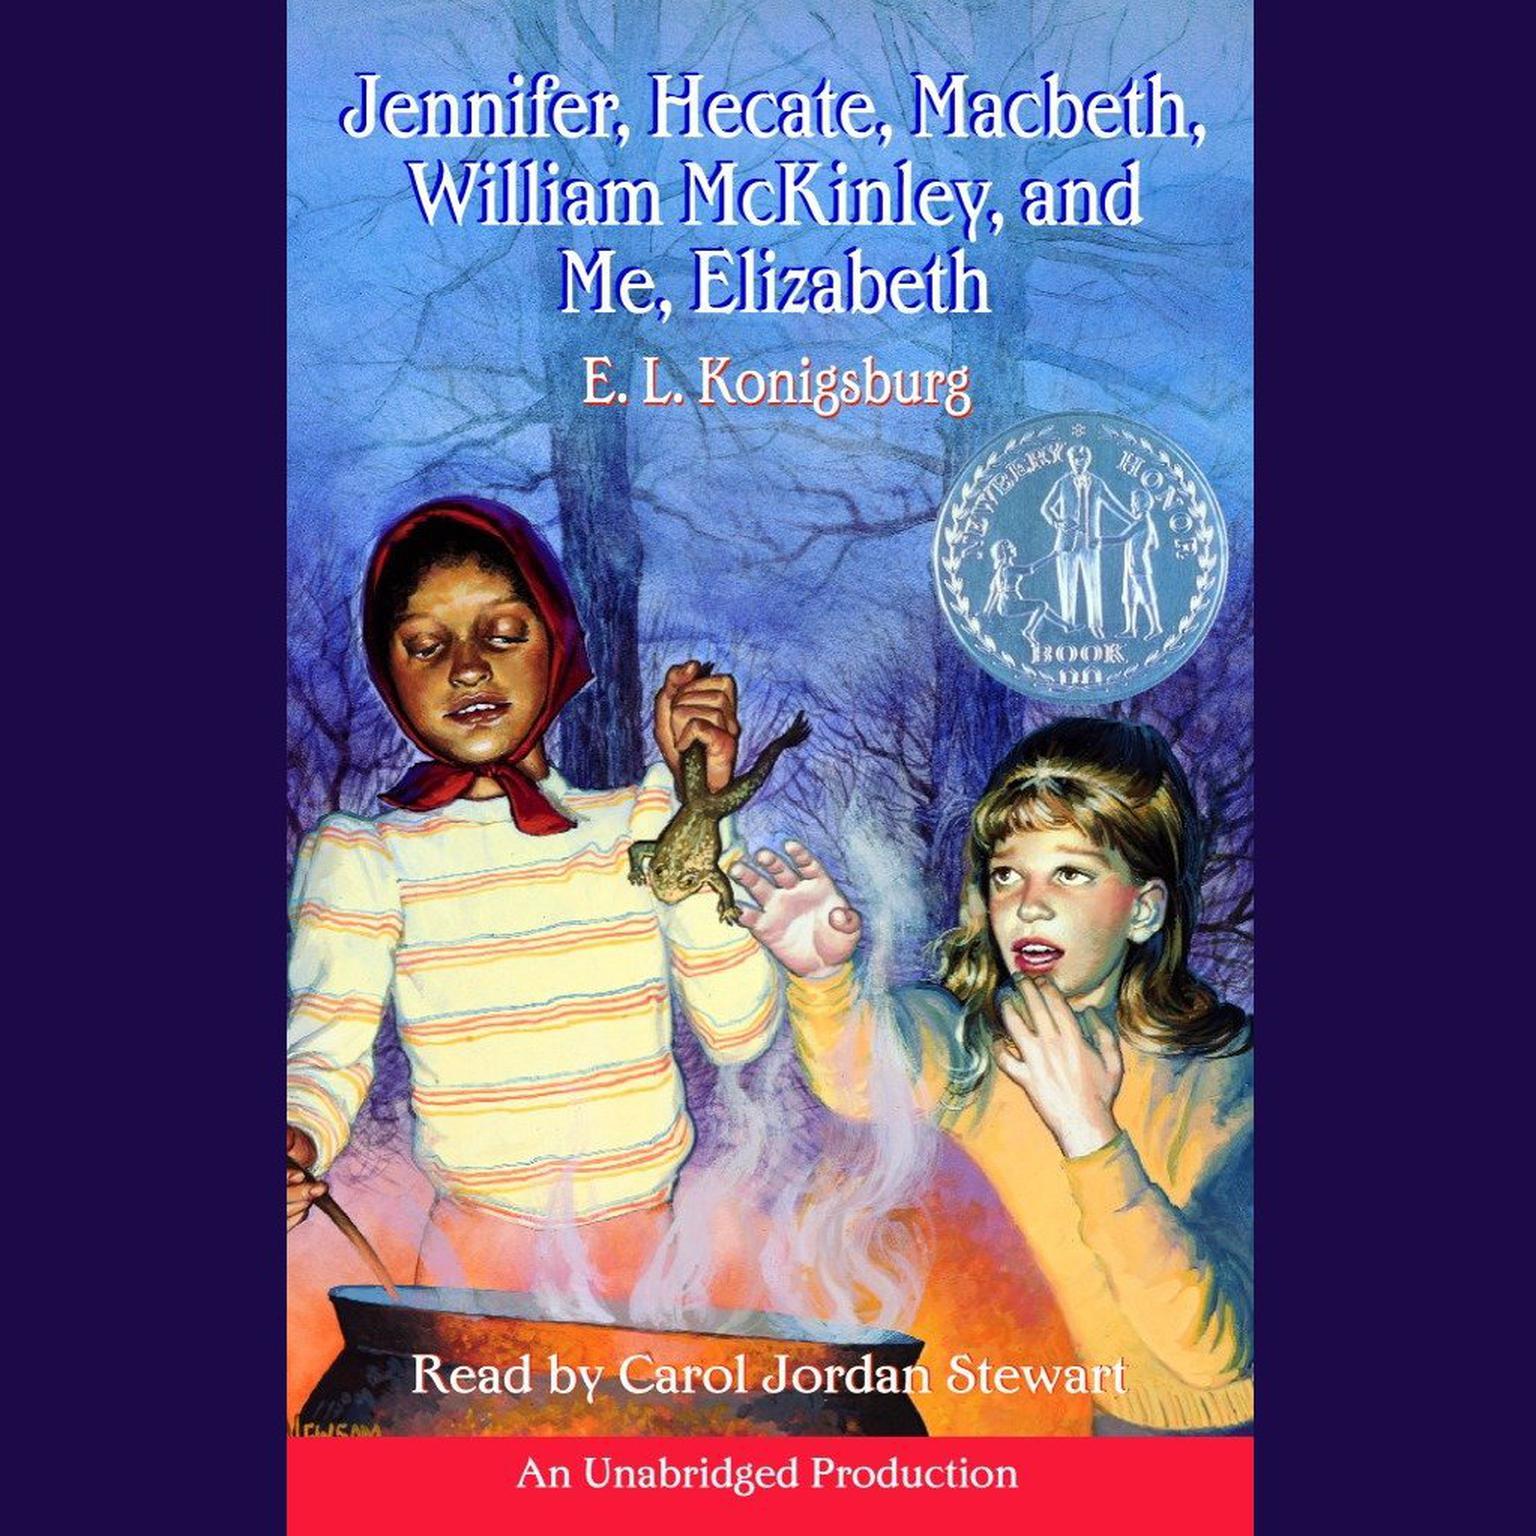 Jennifer, Hecate, Macbeth, William McKinley, and Me, Elizabeth Audiobook, by E. L. Konigsburg